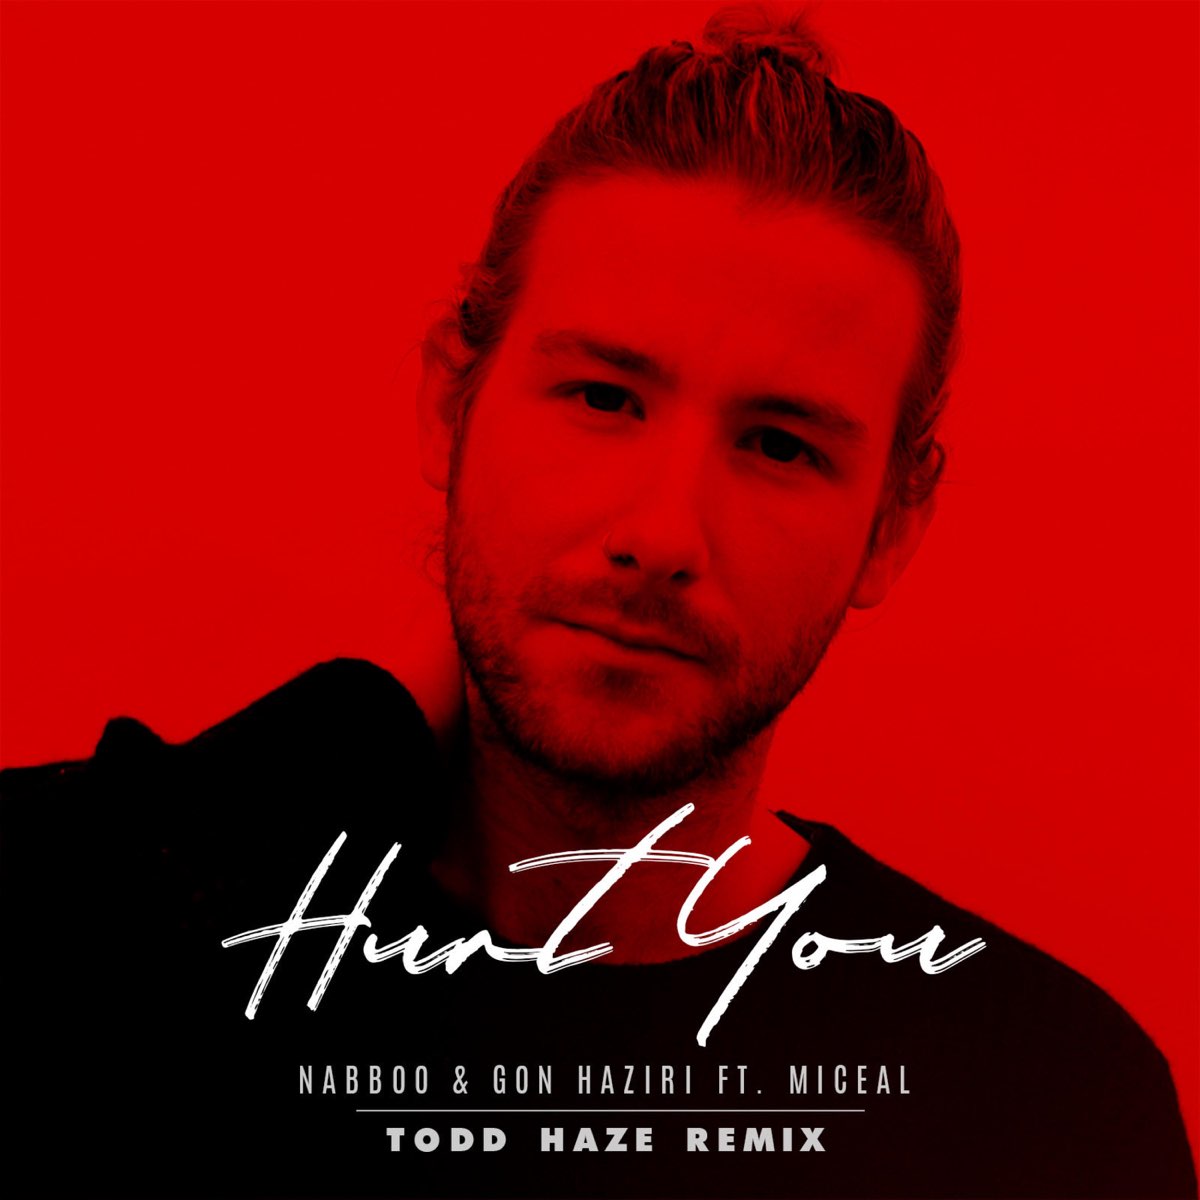 naBBoo & Gon Haziri featuring Miceal & Todd Haze — Hurt You (Todd Haze Remix) cover artwork